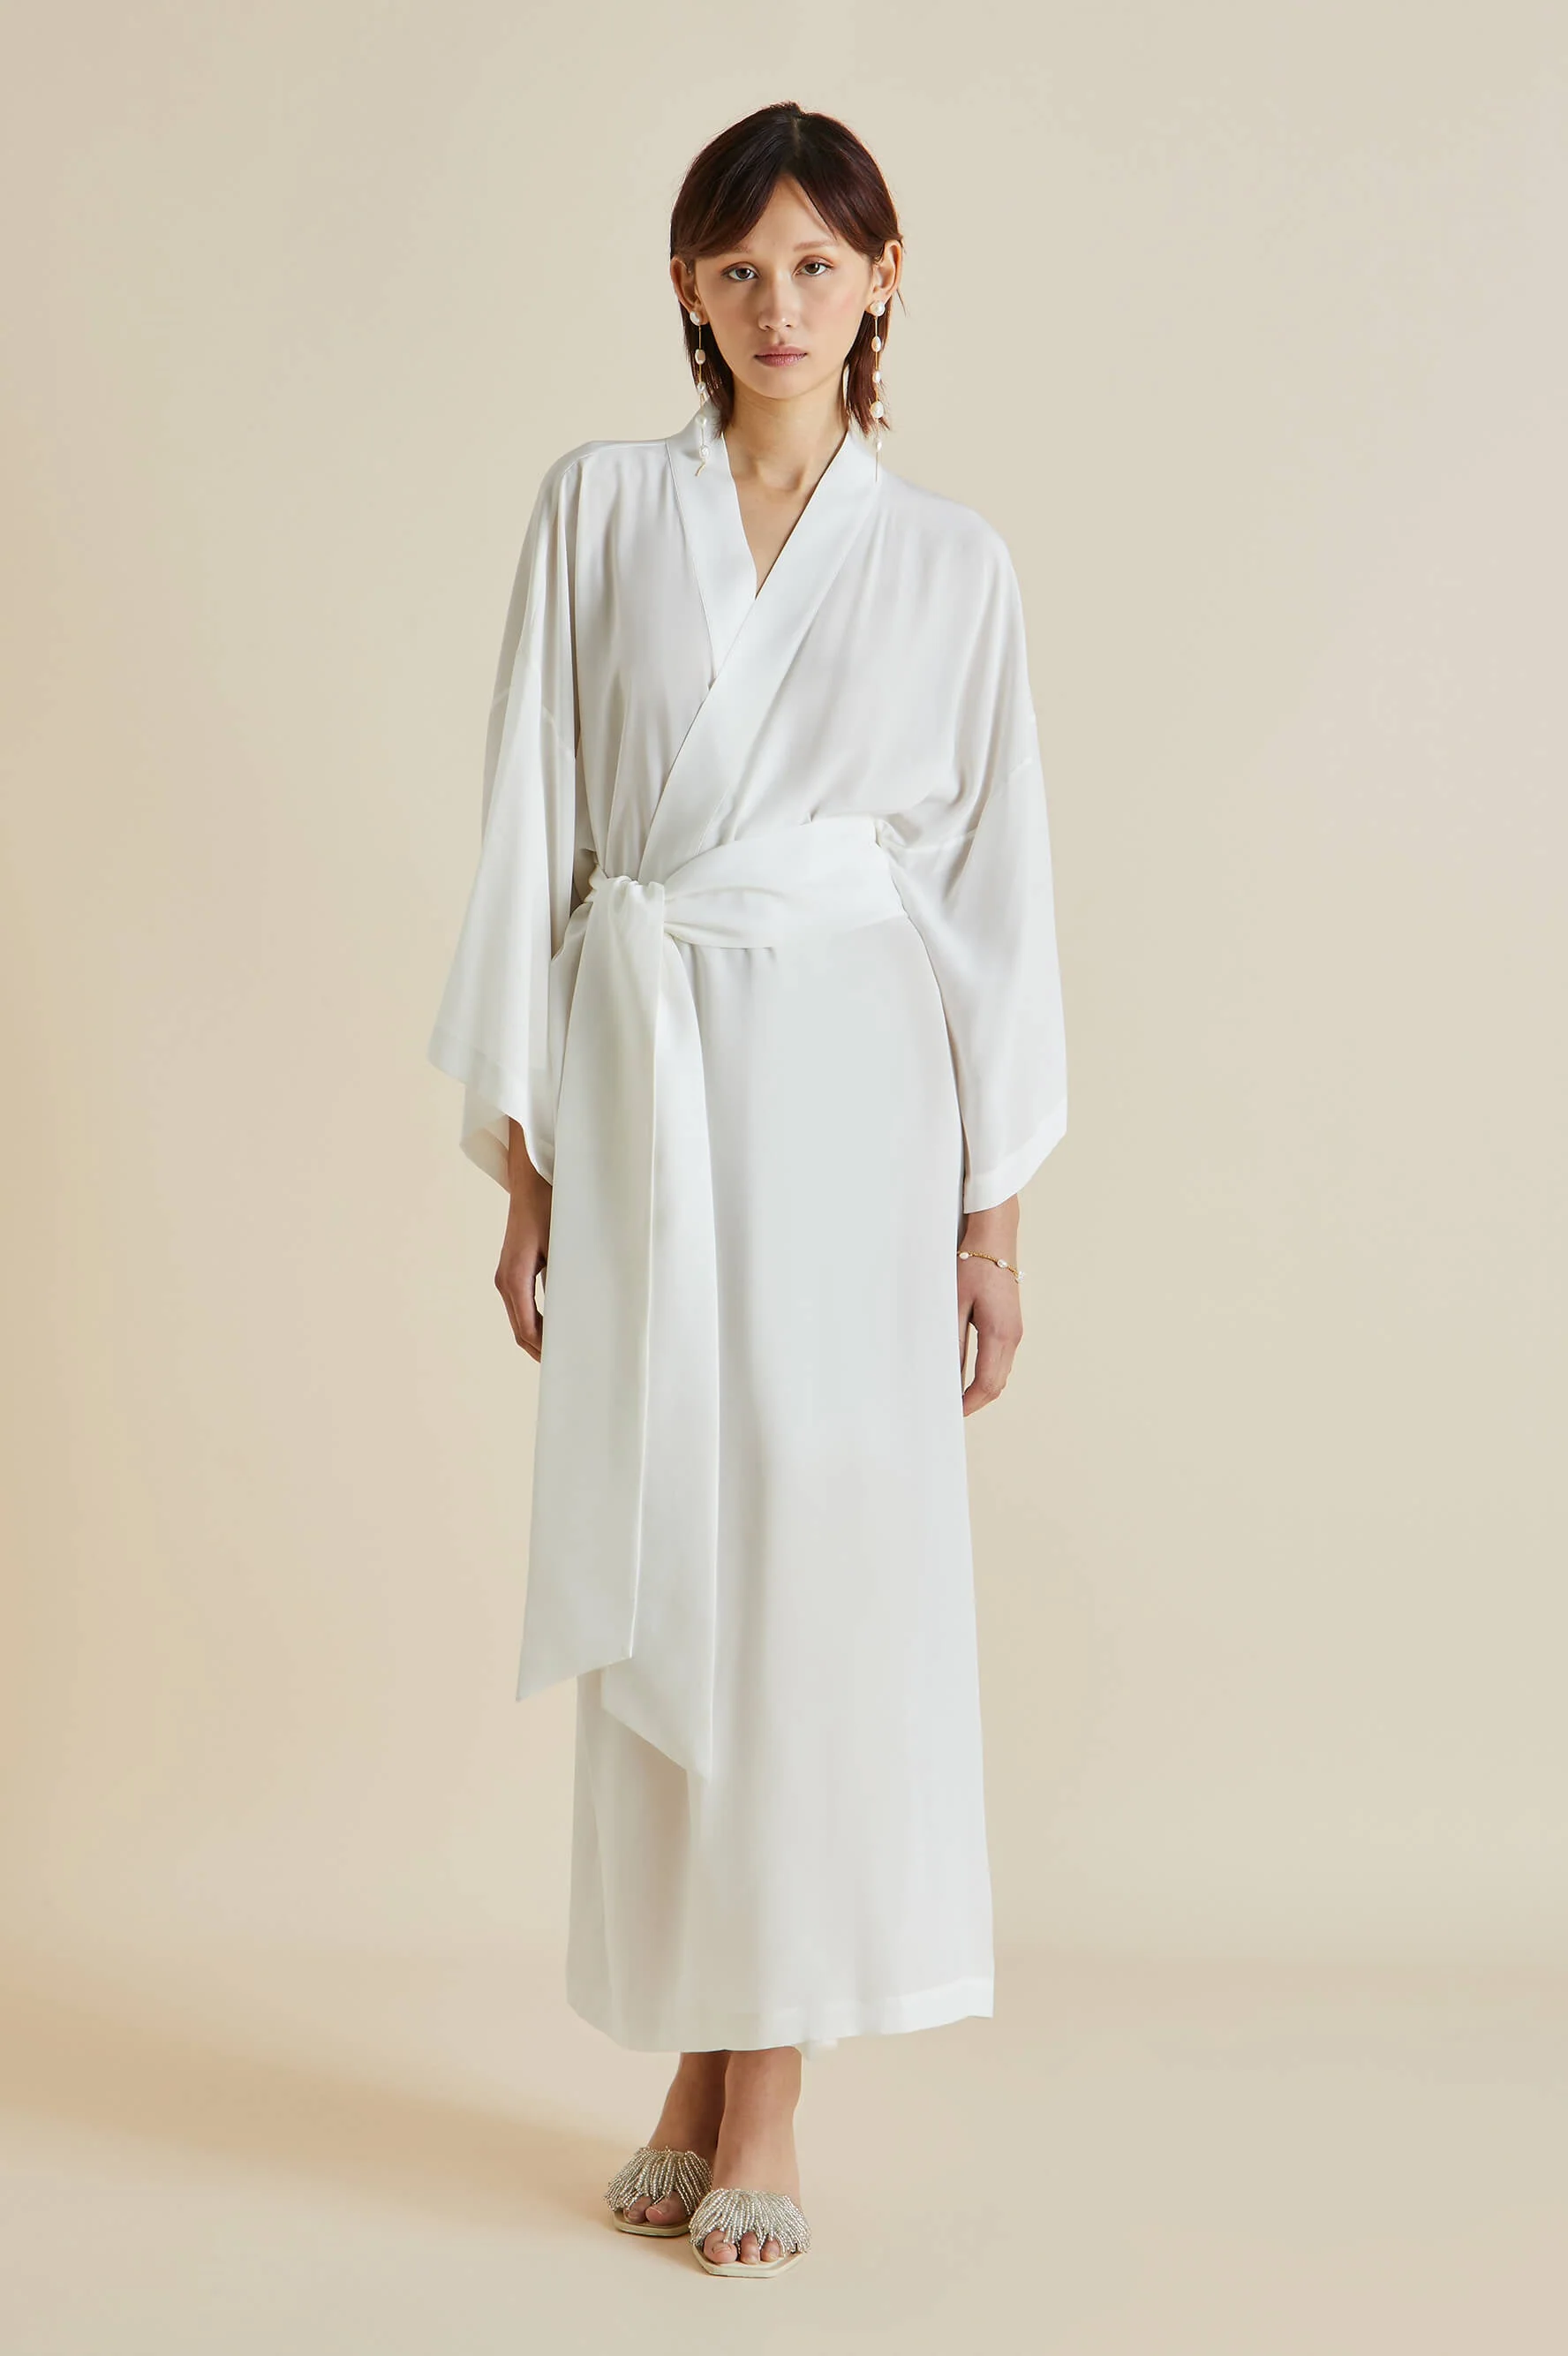 Olivia Von Halle Queenie Ivory White Silk Crepe de Chine Honeymoon & Bridal Kimono Style Robe